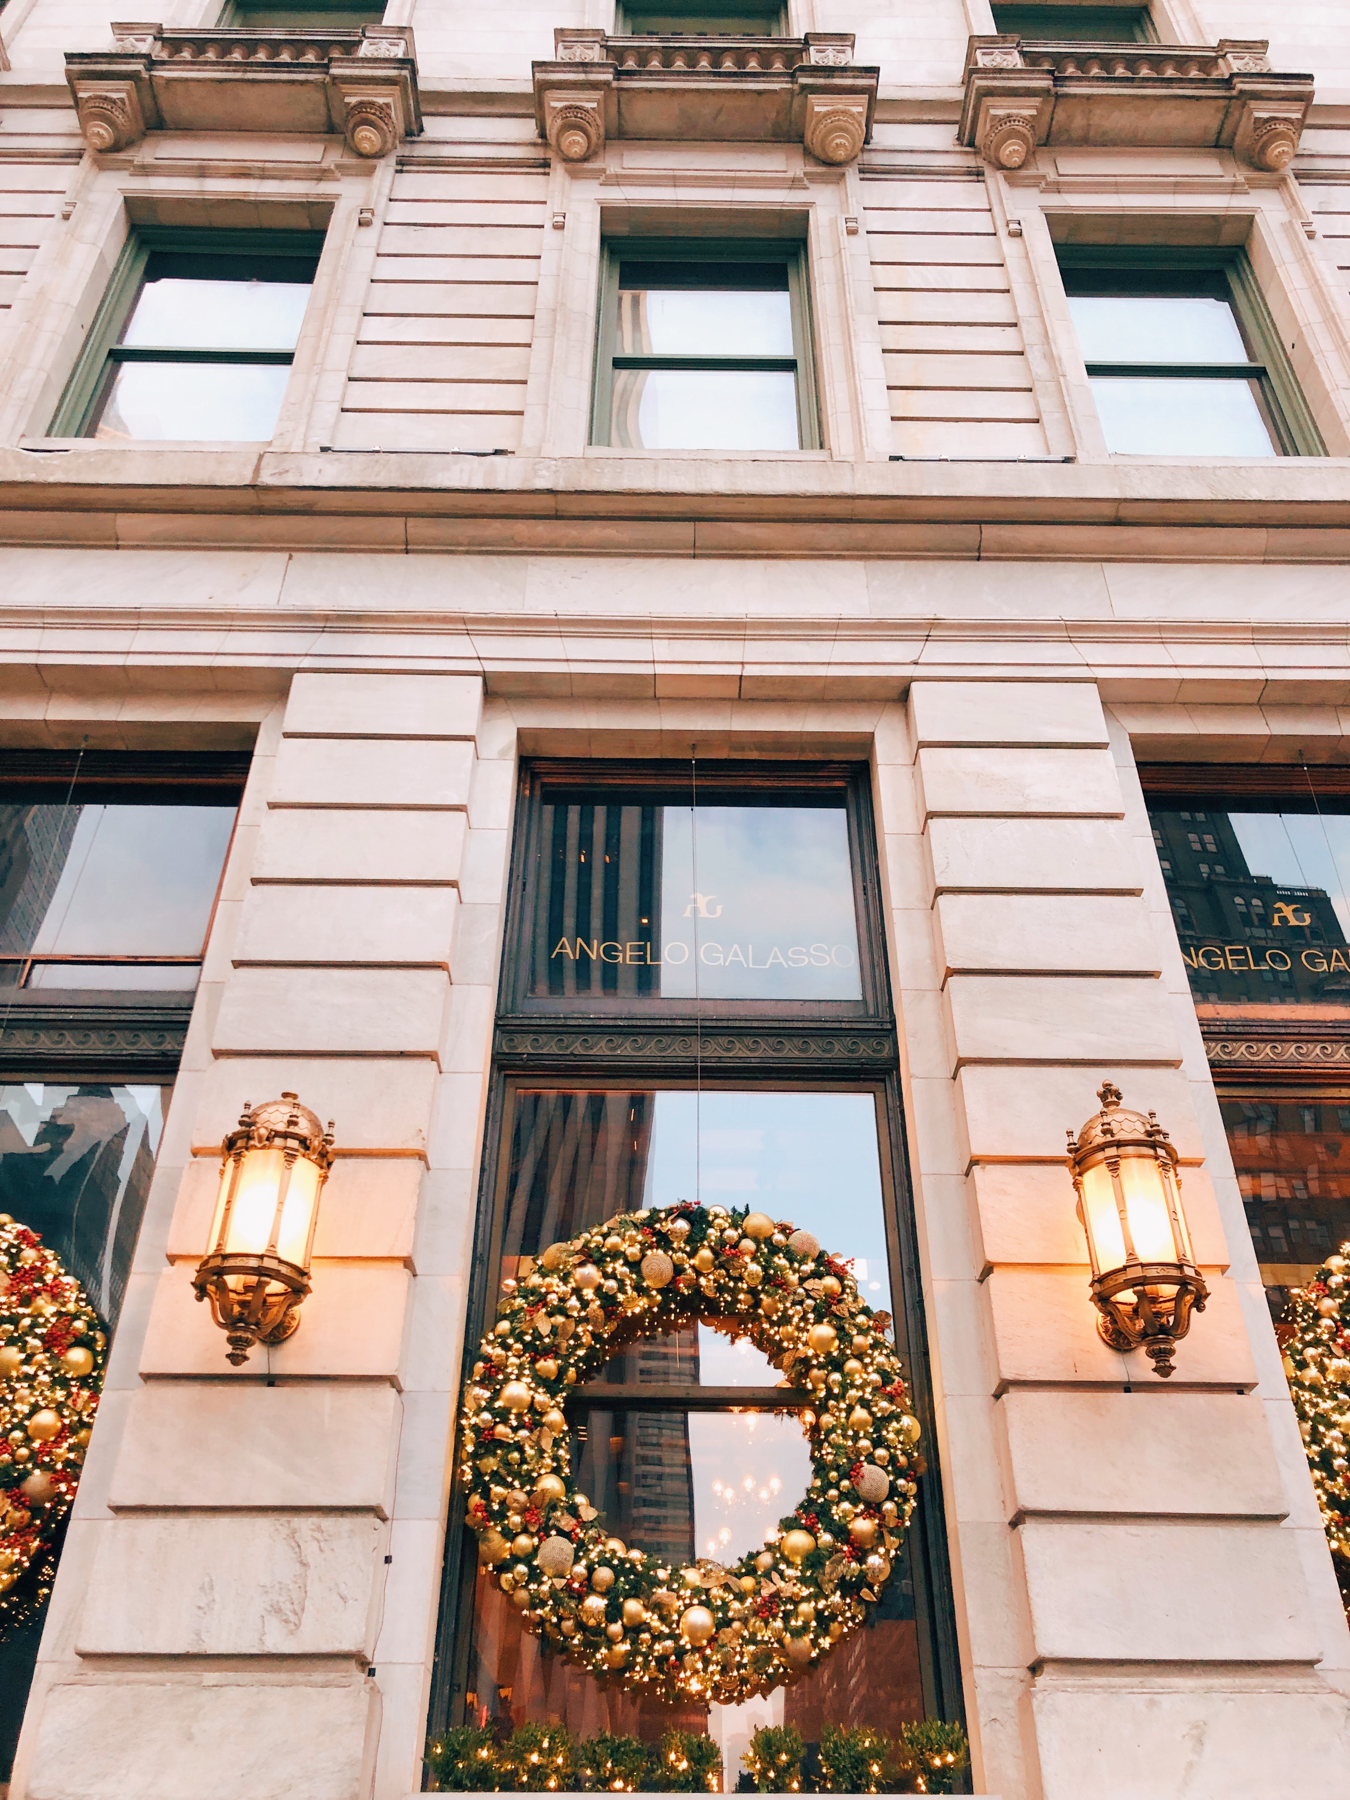 Giant Christmas wreaths on the Plaza Hotel